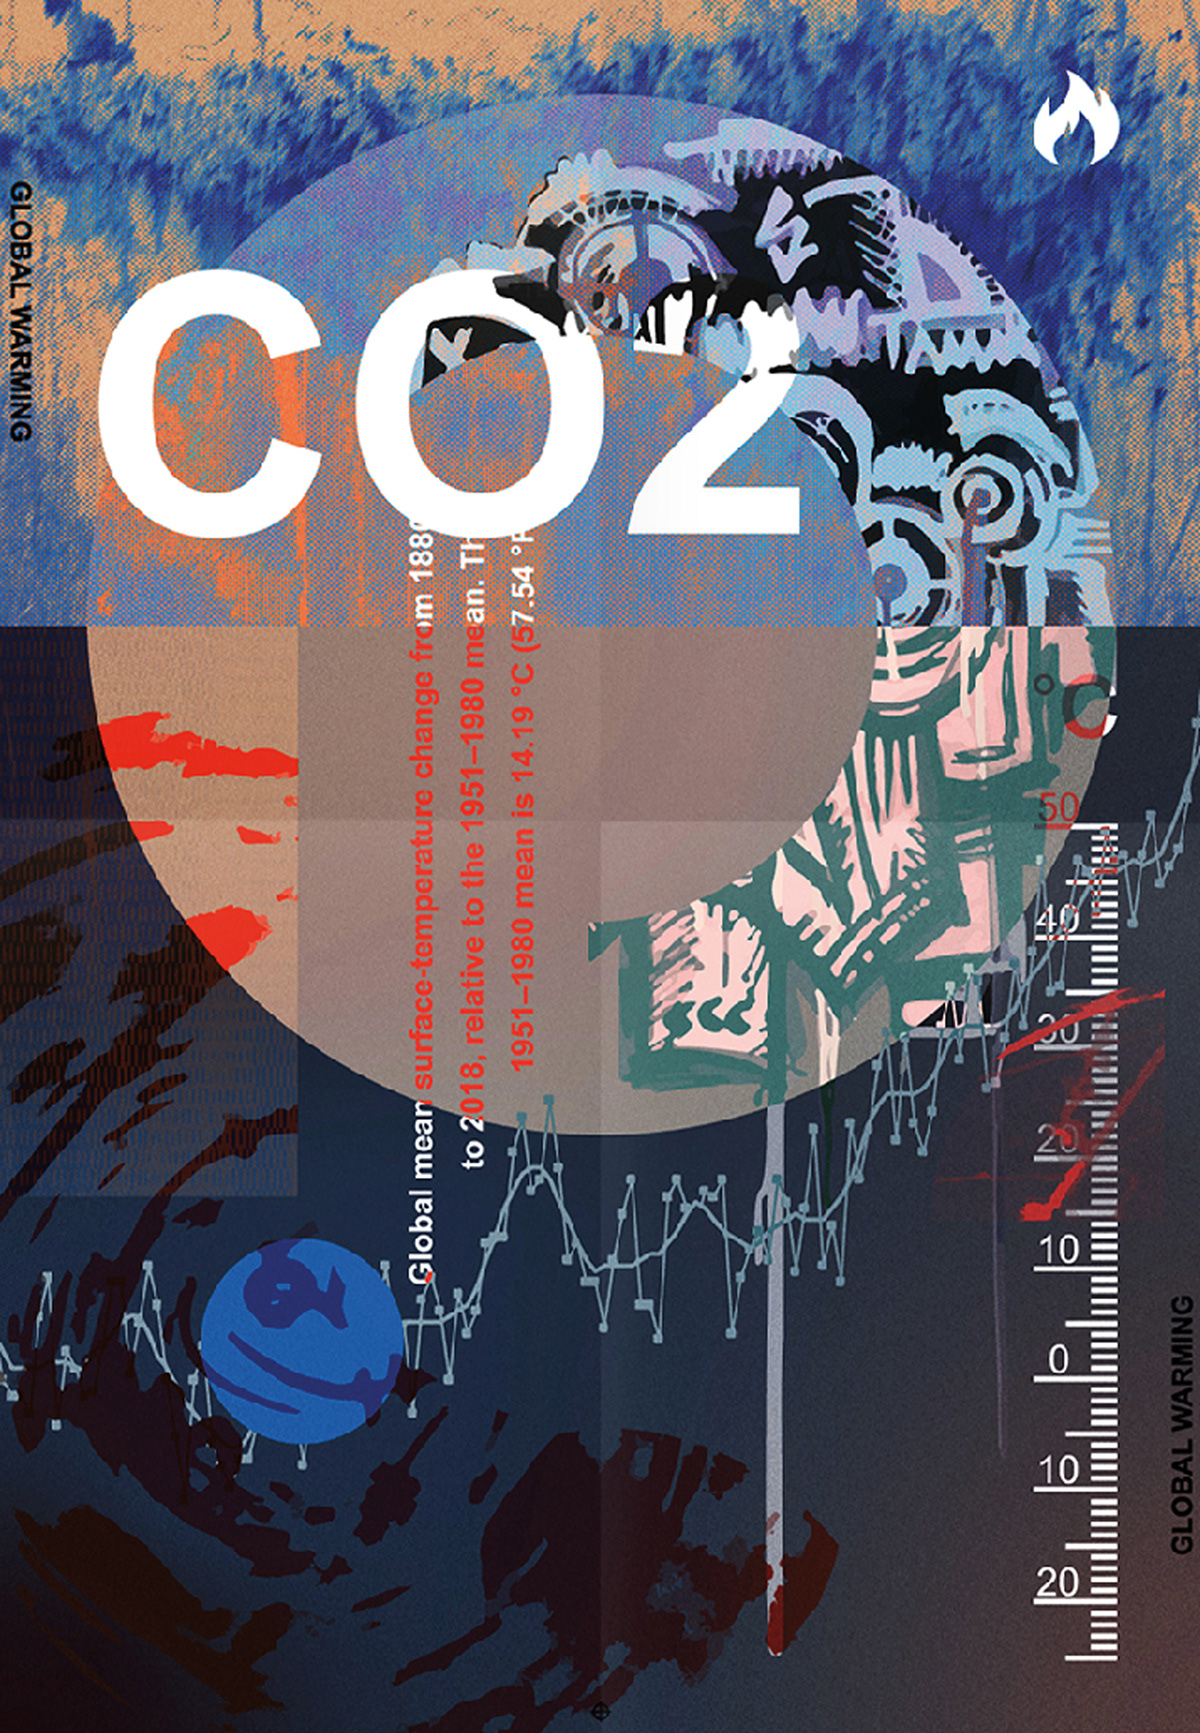 awareness climate change Collaboration art Creativity future planet world